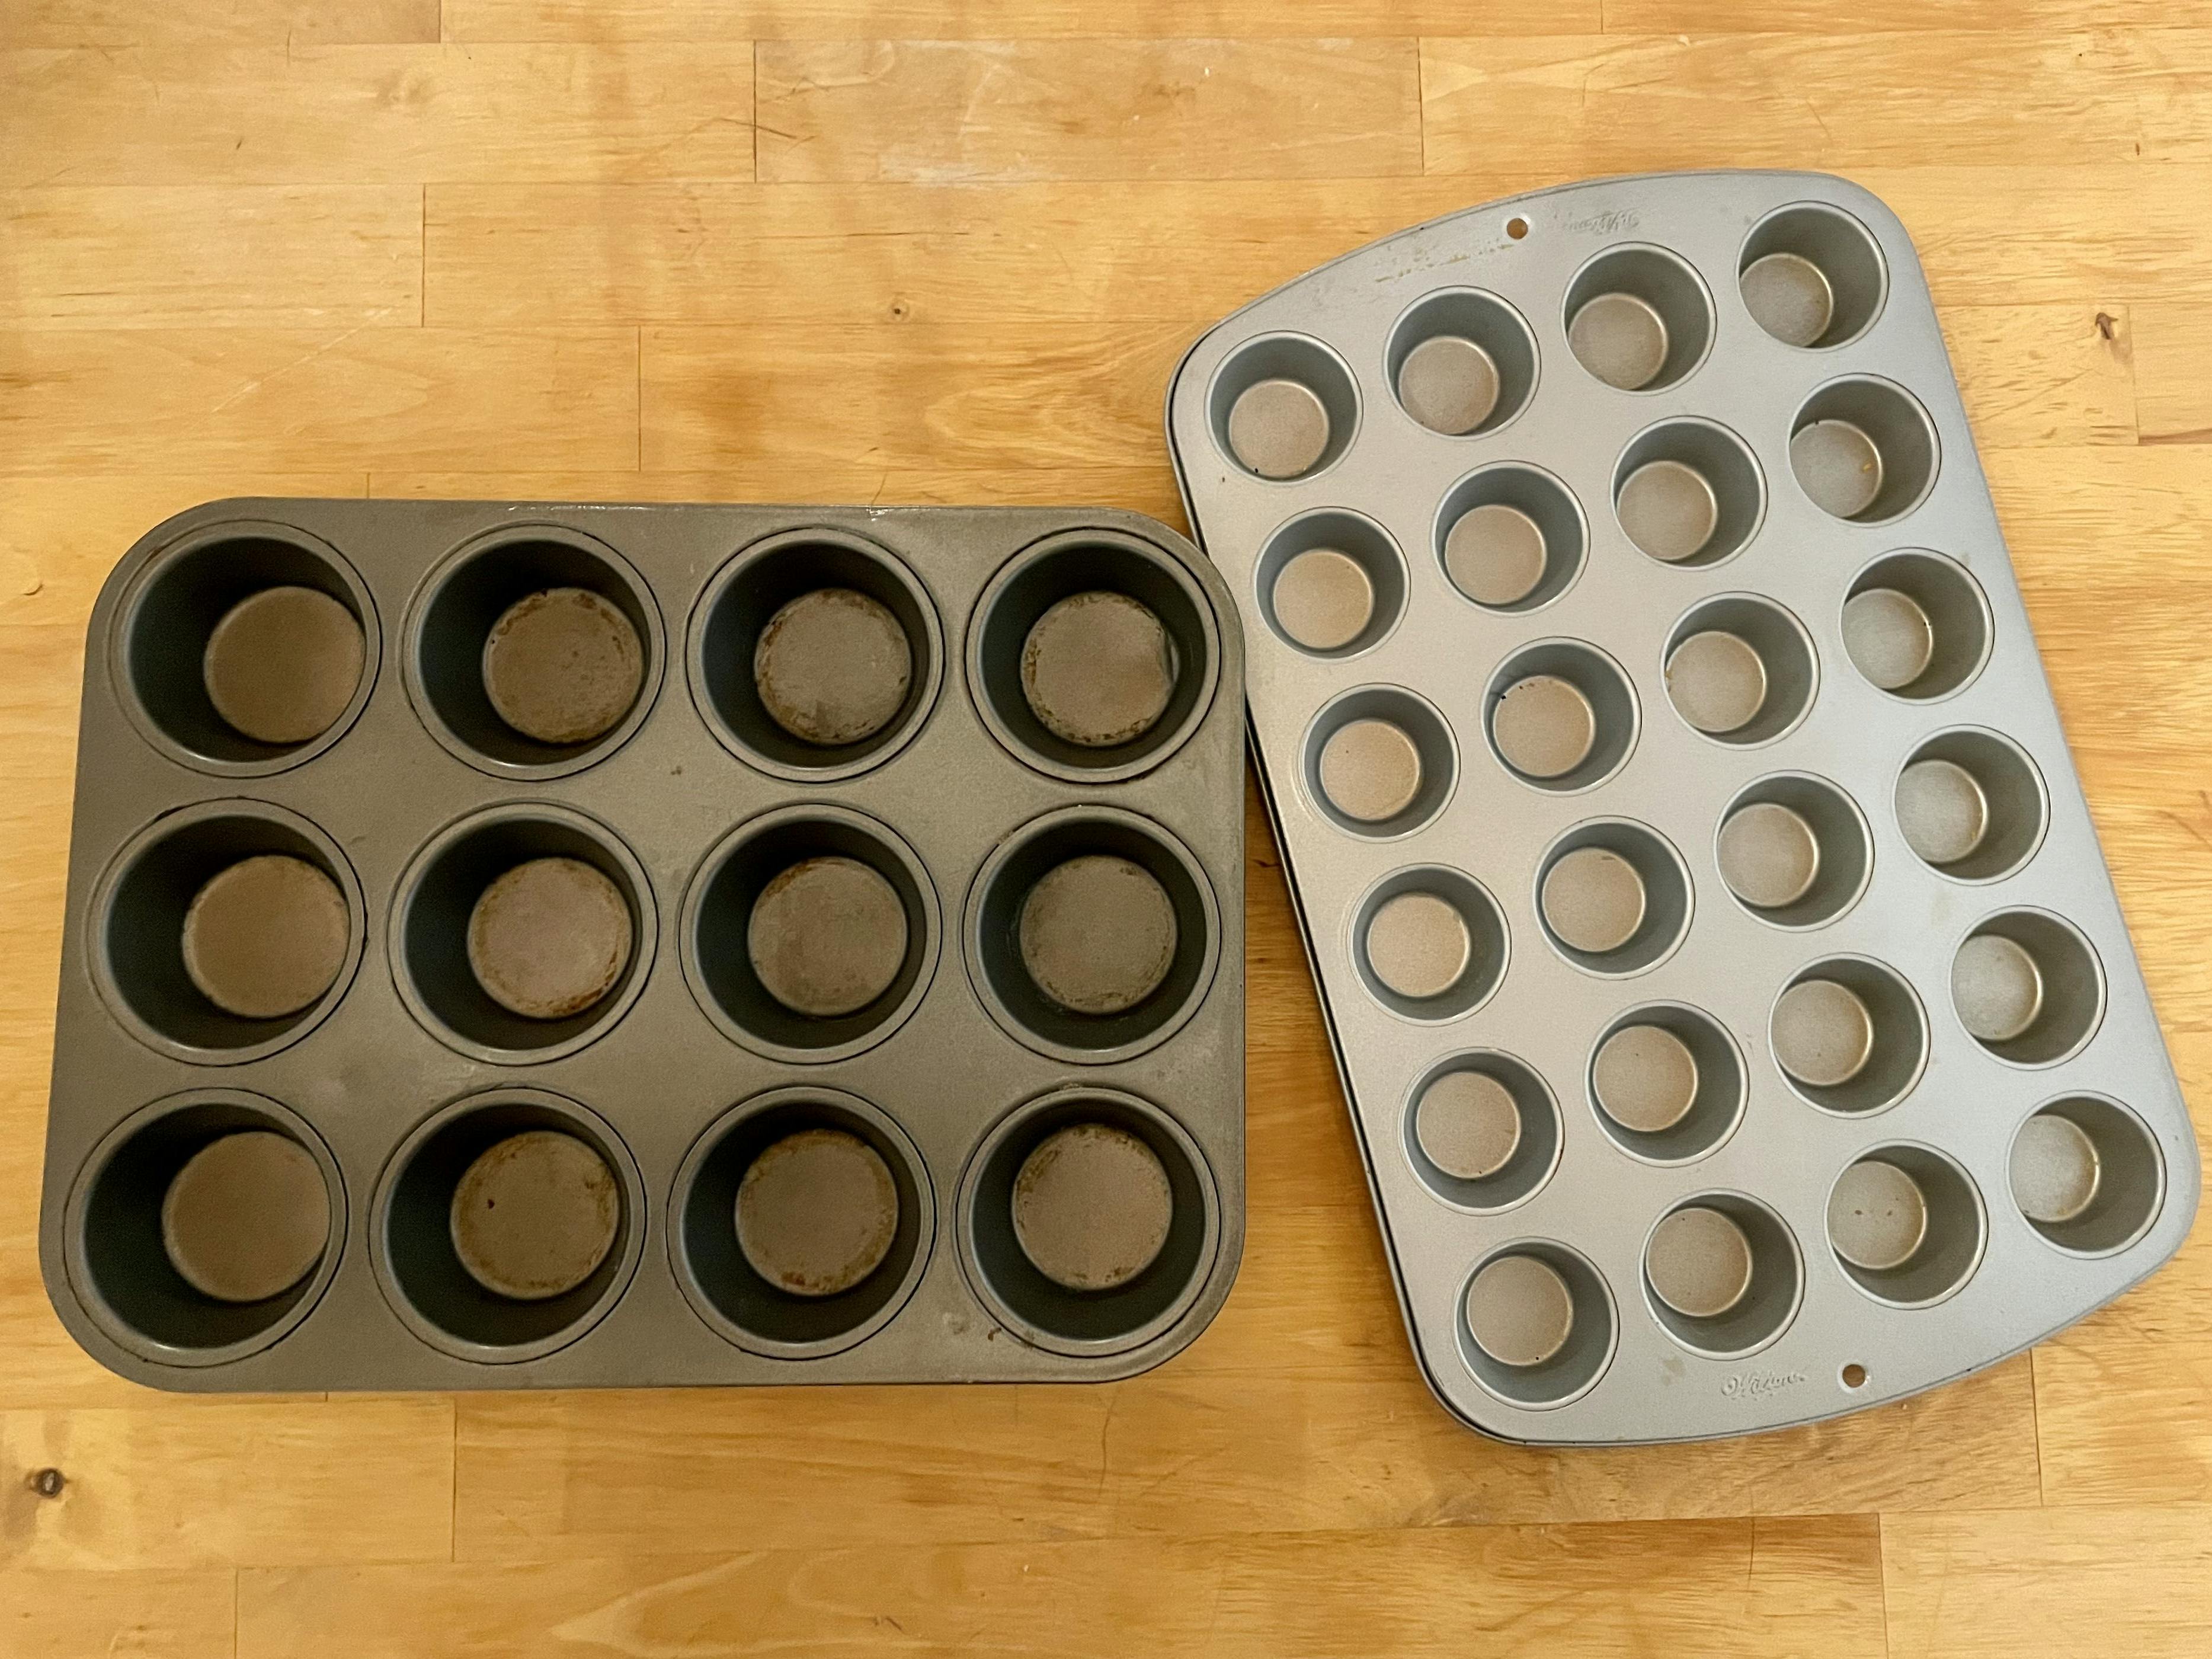 Tasty 3 Piece Carbon Steel Baking Set: 9x5 Loaf Pan, 9 Fluted